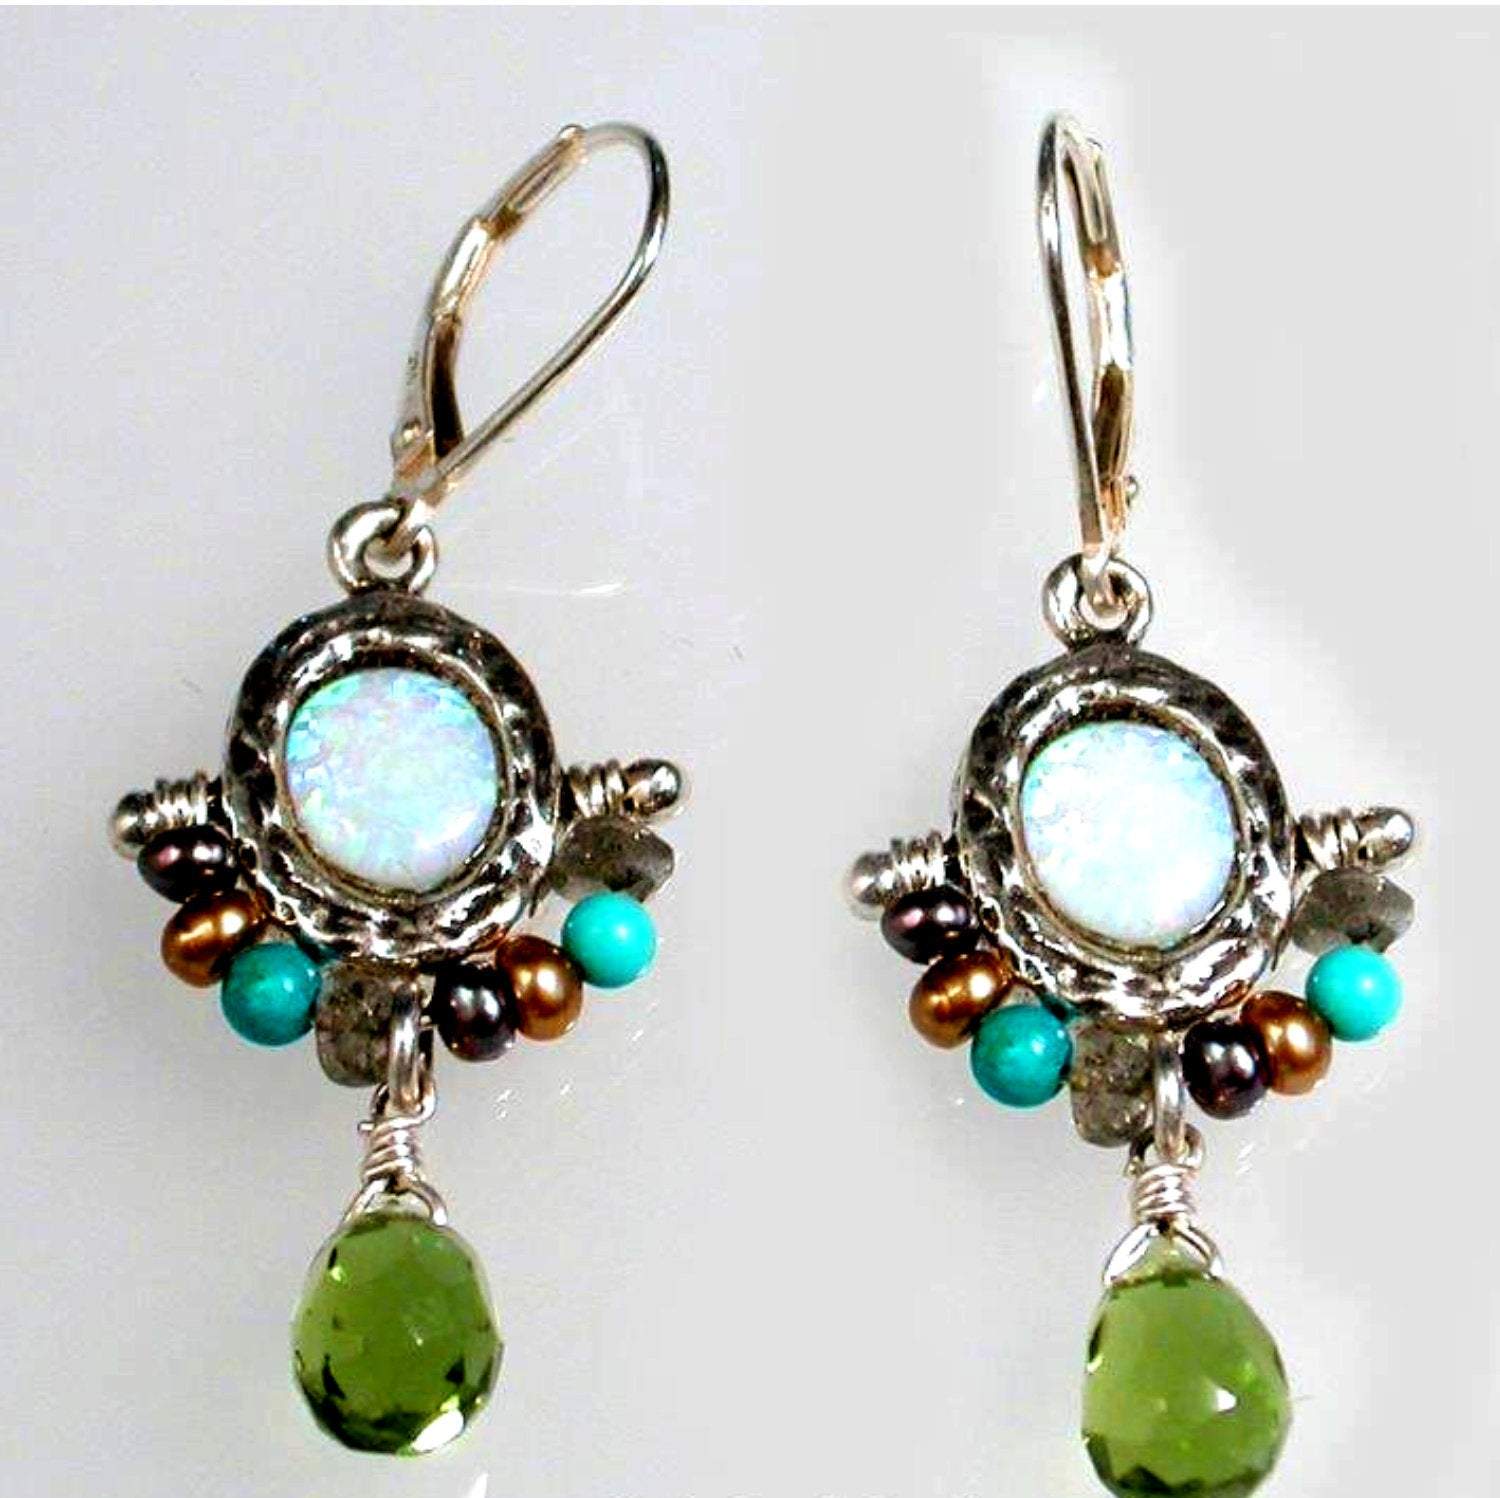 Bluenoemi Jewelry earrings for woman blue opal gemstones earrings/ orecchini argento / gemstones boho chic jewelry/ israelische schmuck/ Valentine gift